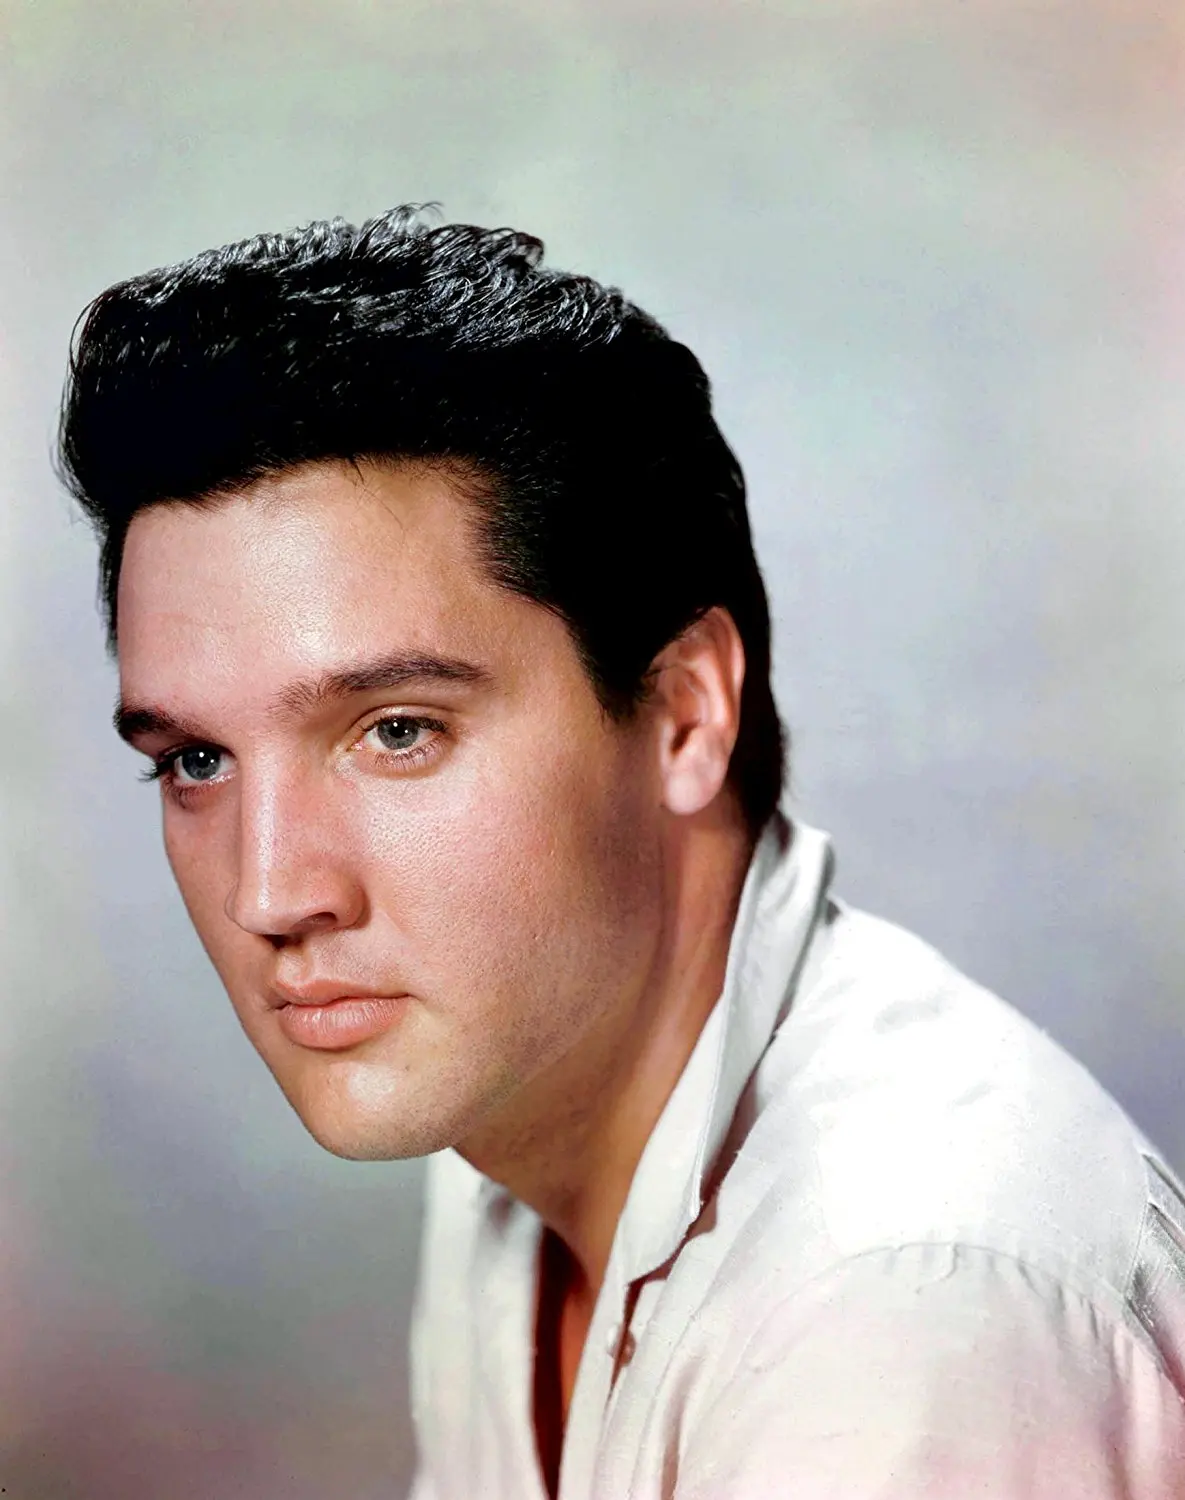 Elvis Presley photo gallery - 72 high quality pics of Elvis Presley ...